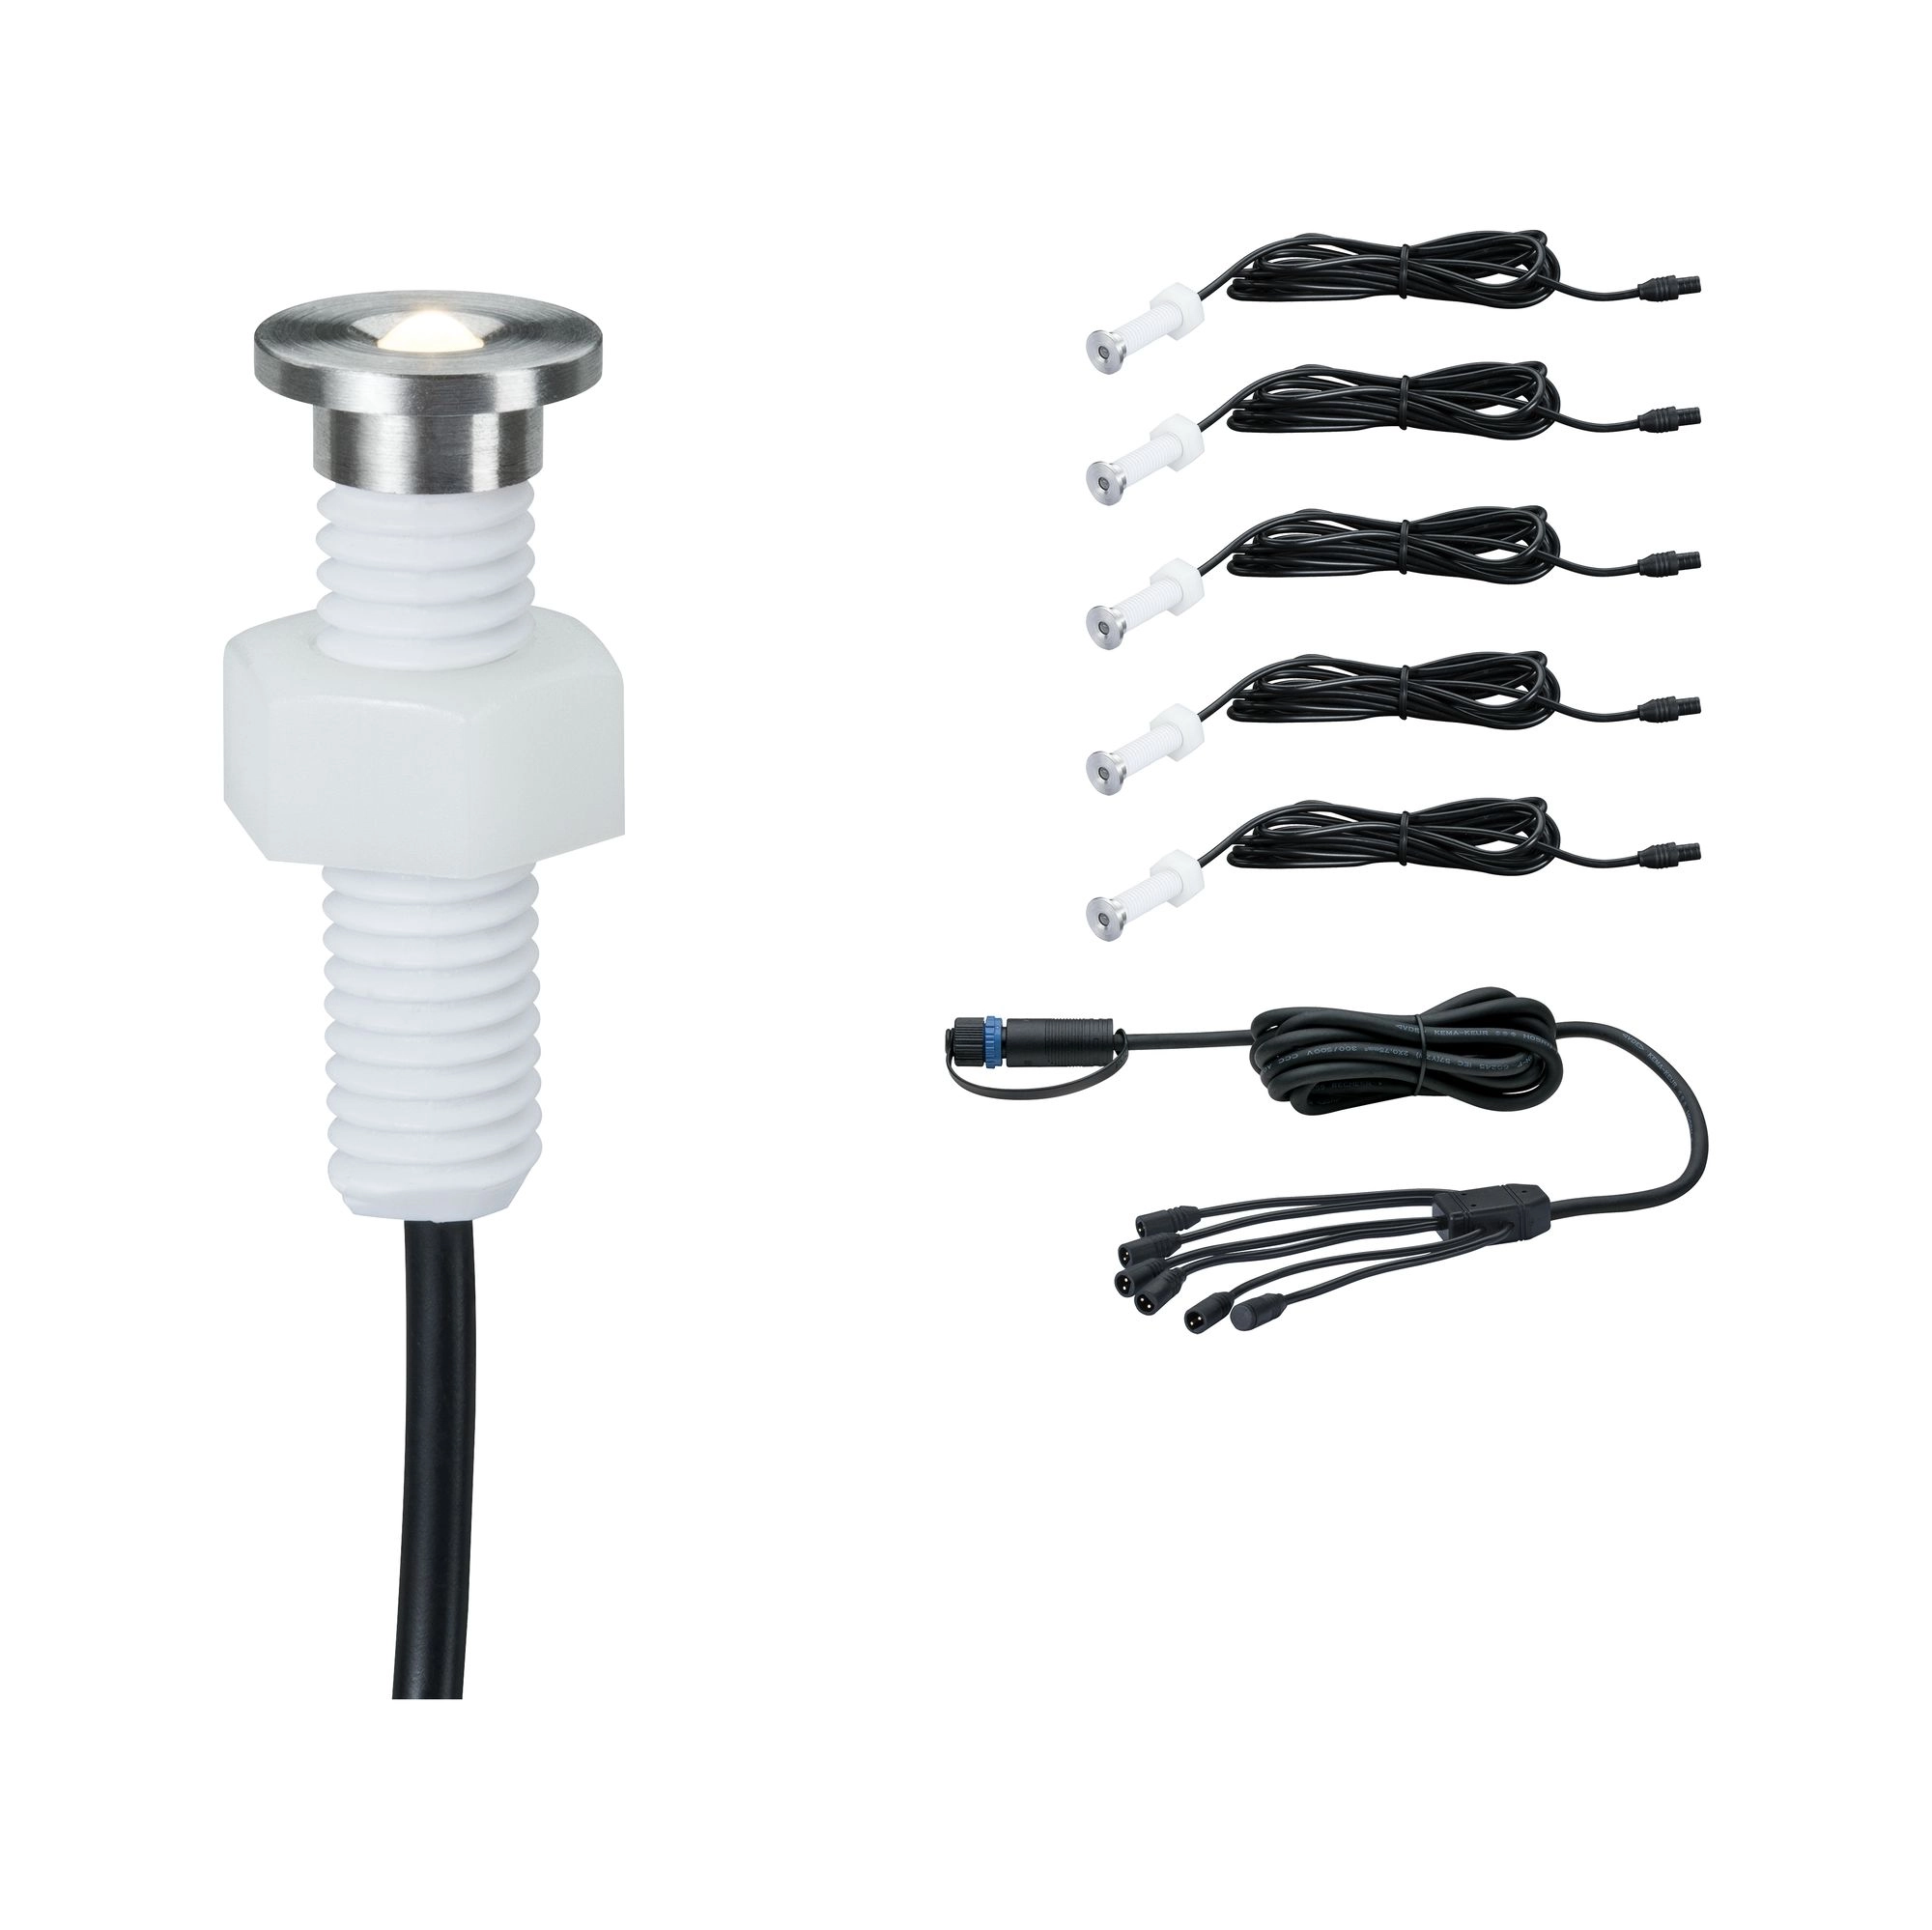 Paulmann LED-Einbauleuchte Plug x Shine II bei MicroPen / W 0,22 Set 5 kaufen K OBI 3\'000 